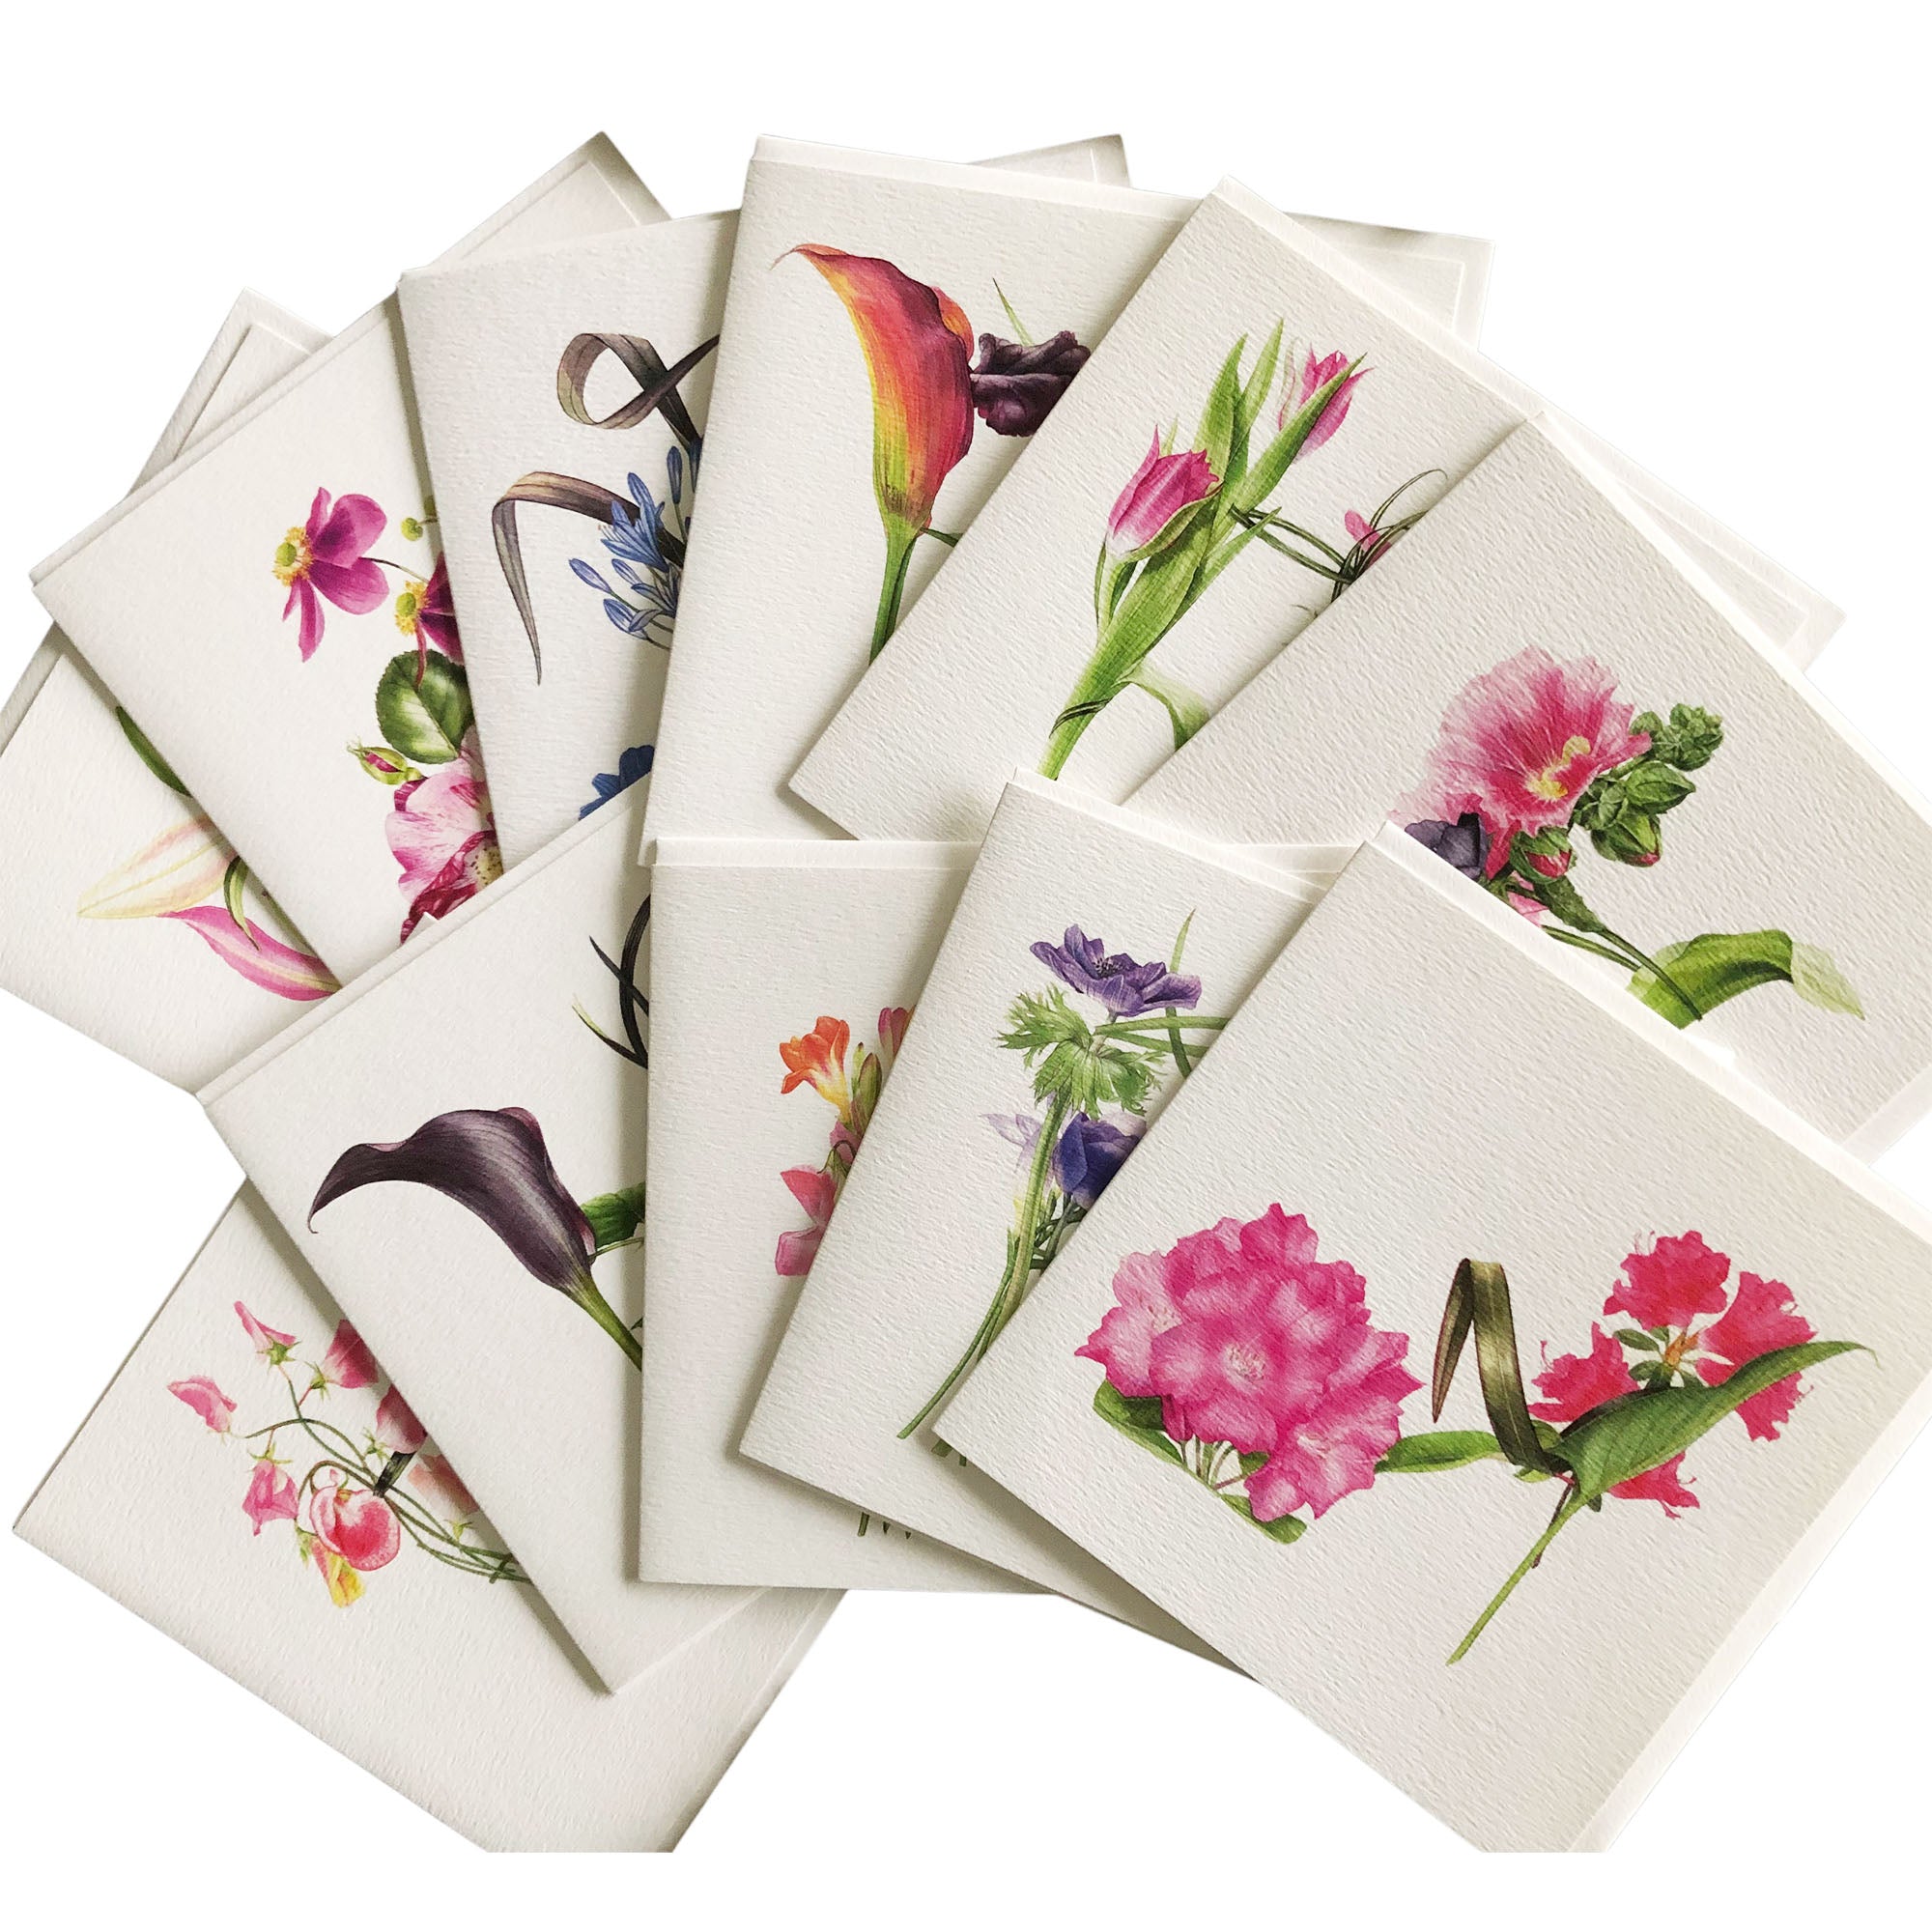 Billy's Botanical Shoe Cards Bumper Pack